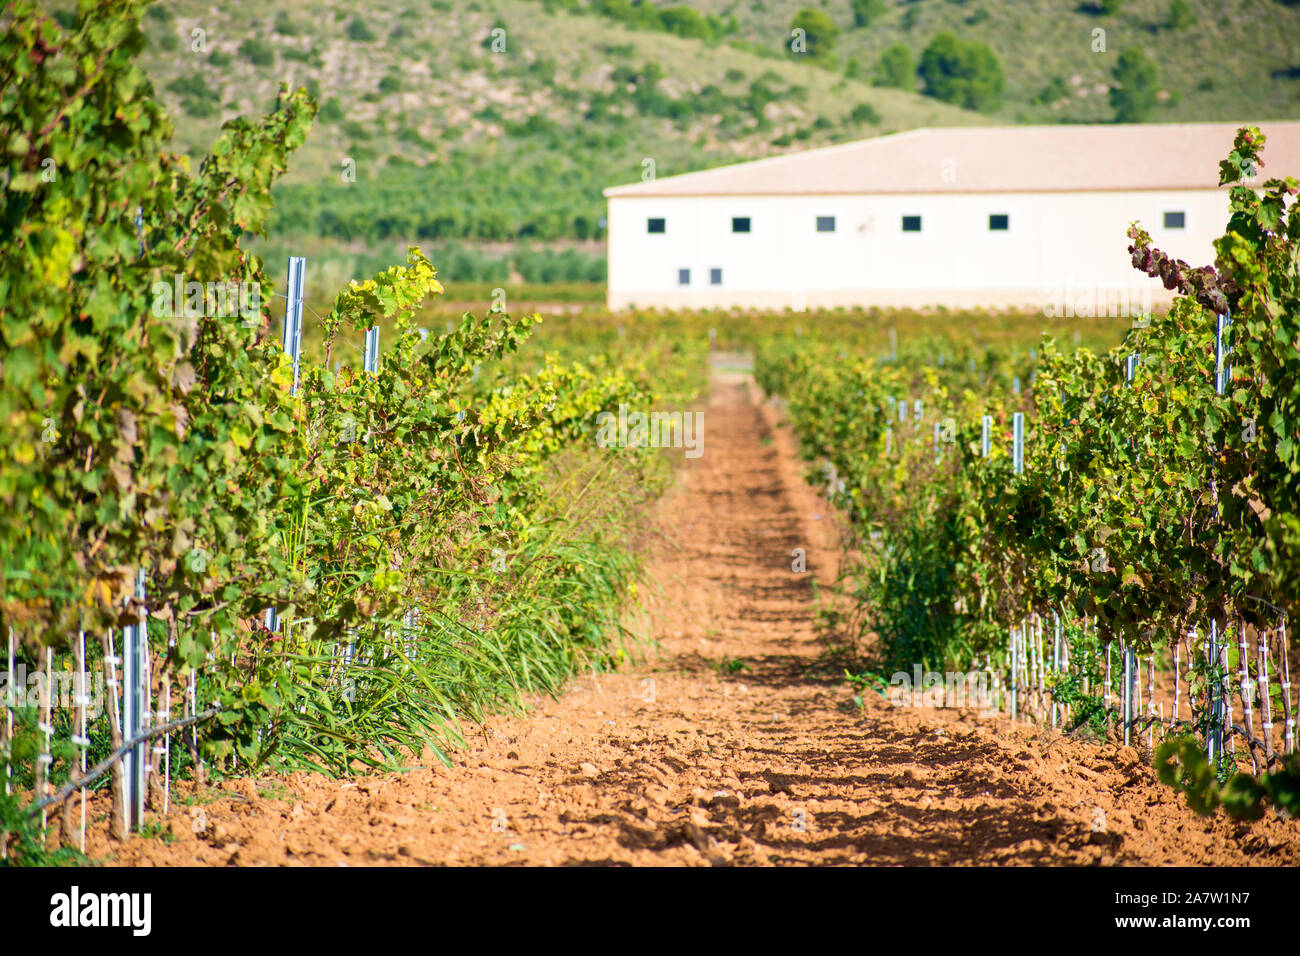 Vines plantation in Castilla la mancha, Spain, 2019. Vineyard perspective in agricultural field. Wind moving vine leaves Stock Photo